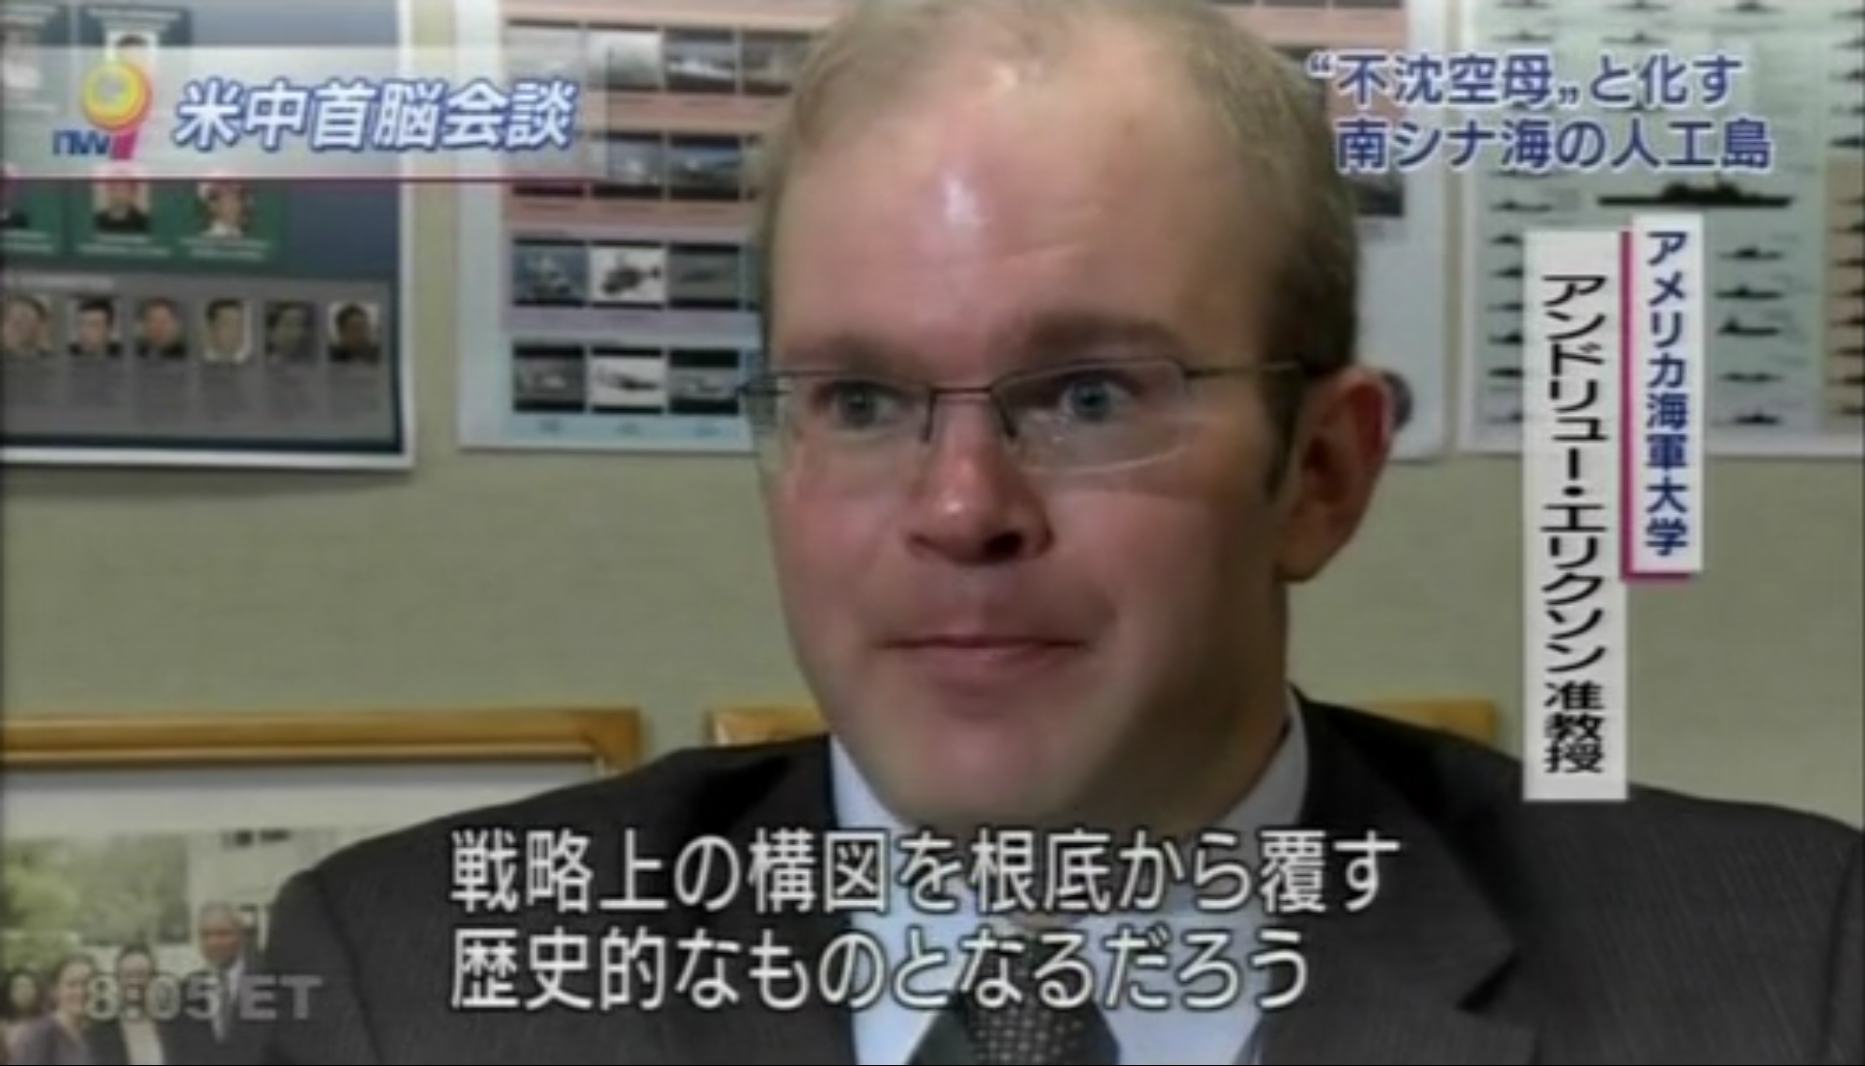 “Experts Discuss Security Risks,” Newsline, NHK World, 16 October 2015.